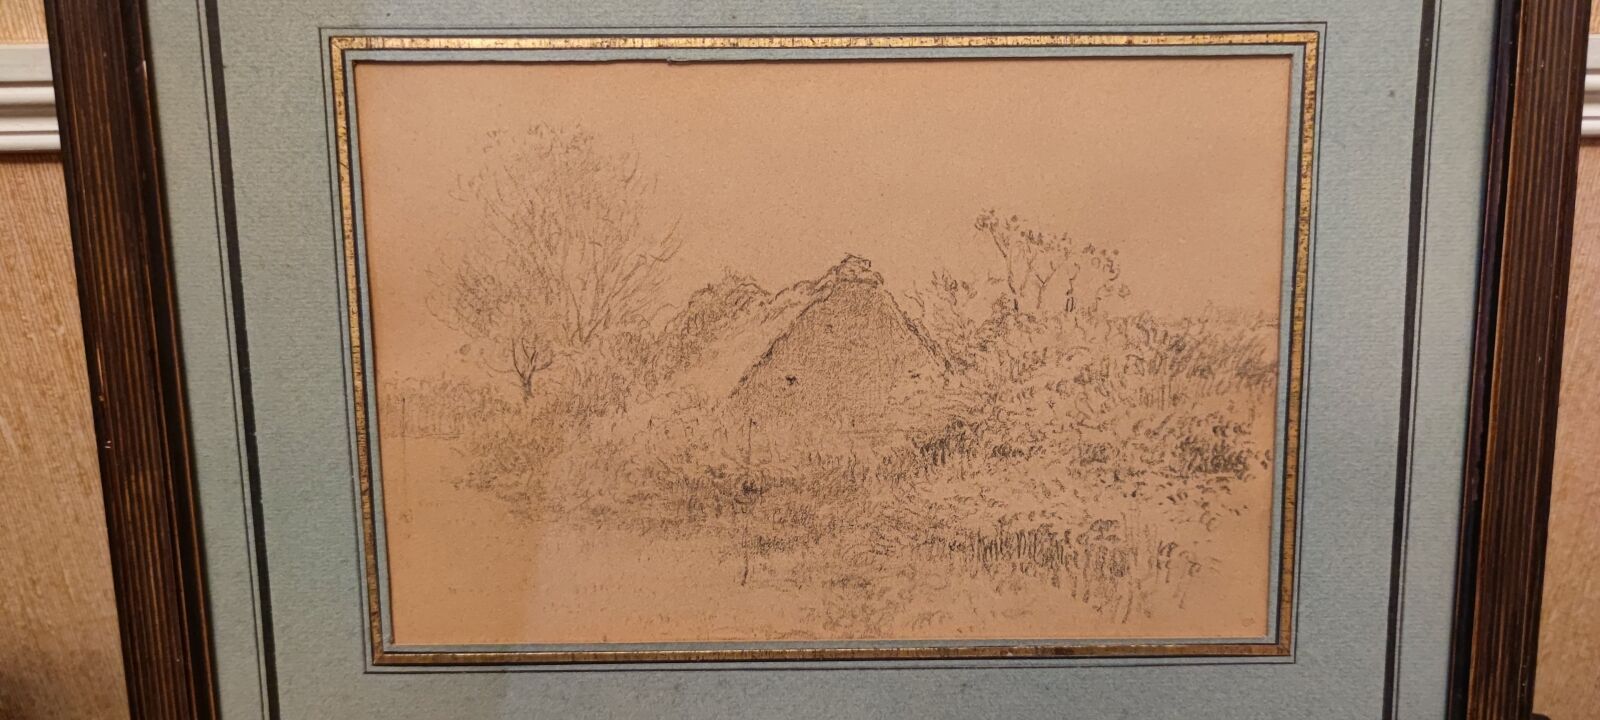 Null 39.Charles MILLET

干草制作和茅草屋

两幅画，其中一幅画上有字母图案。

16 x 24厘米和15 x 28厘米